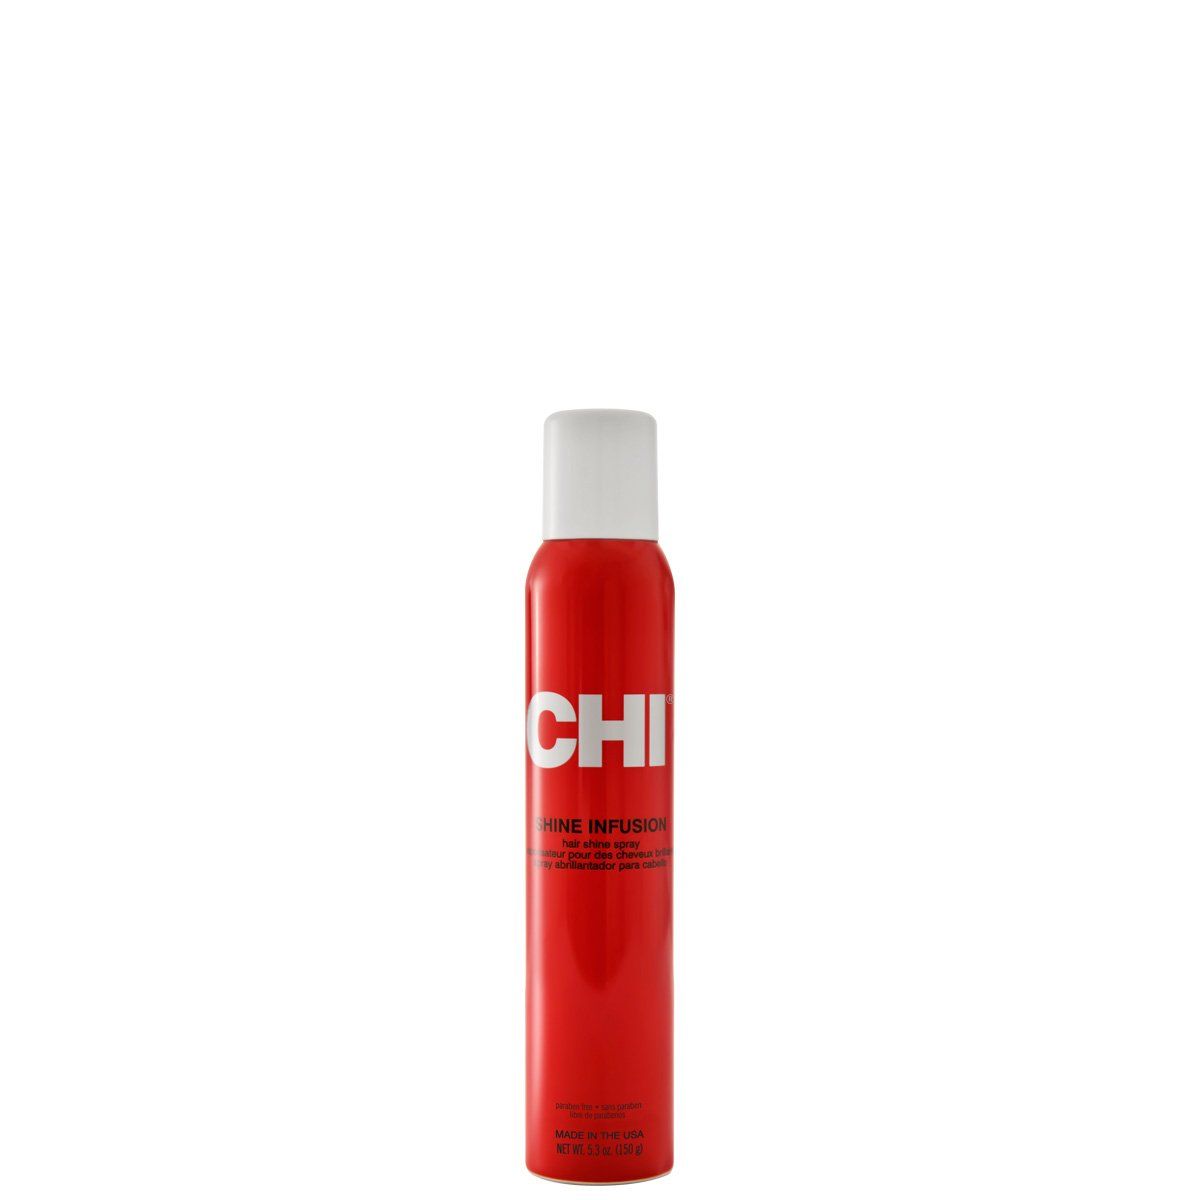 Спрей CHI Styling Shine Infusion Thermal Polishing Spray блеск инфра, 150 г глянцевый воск блеск и контроль styling shine